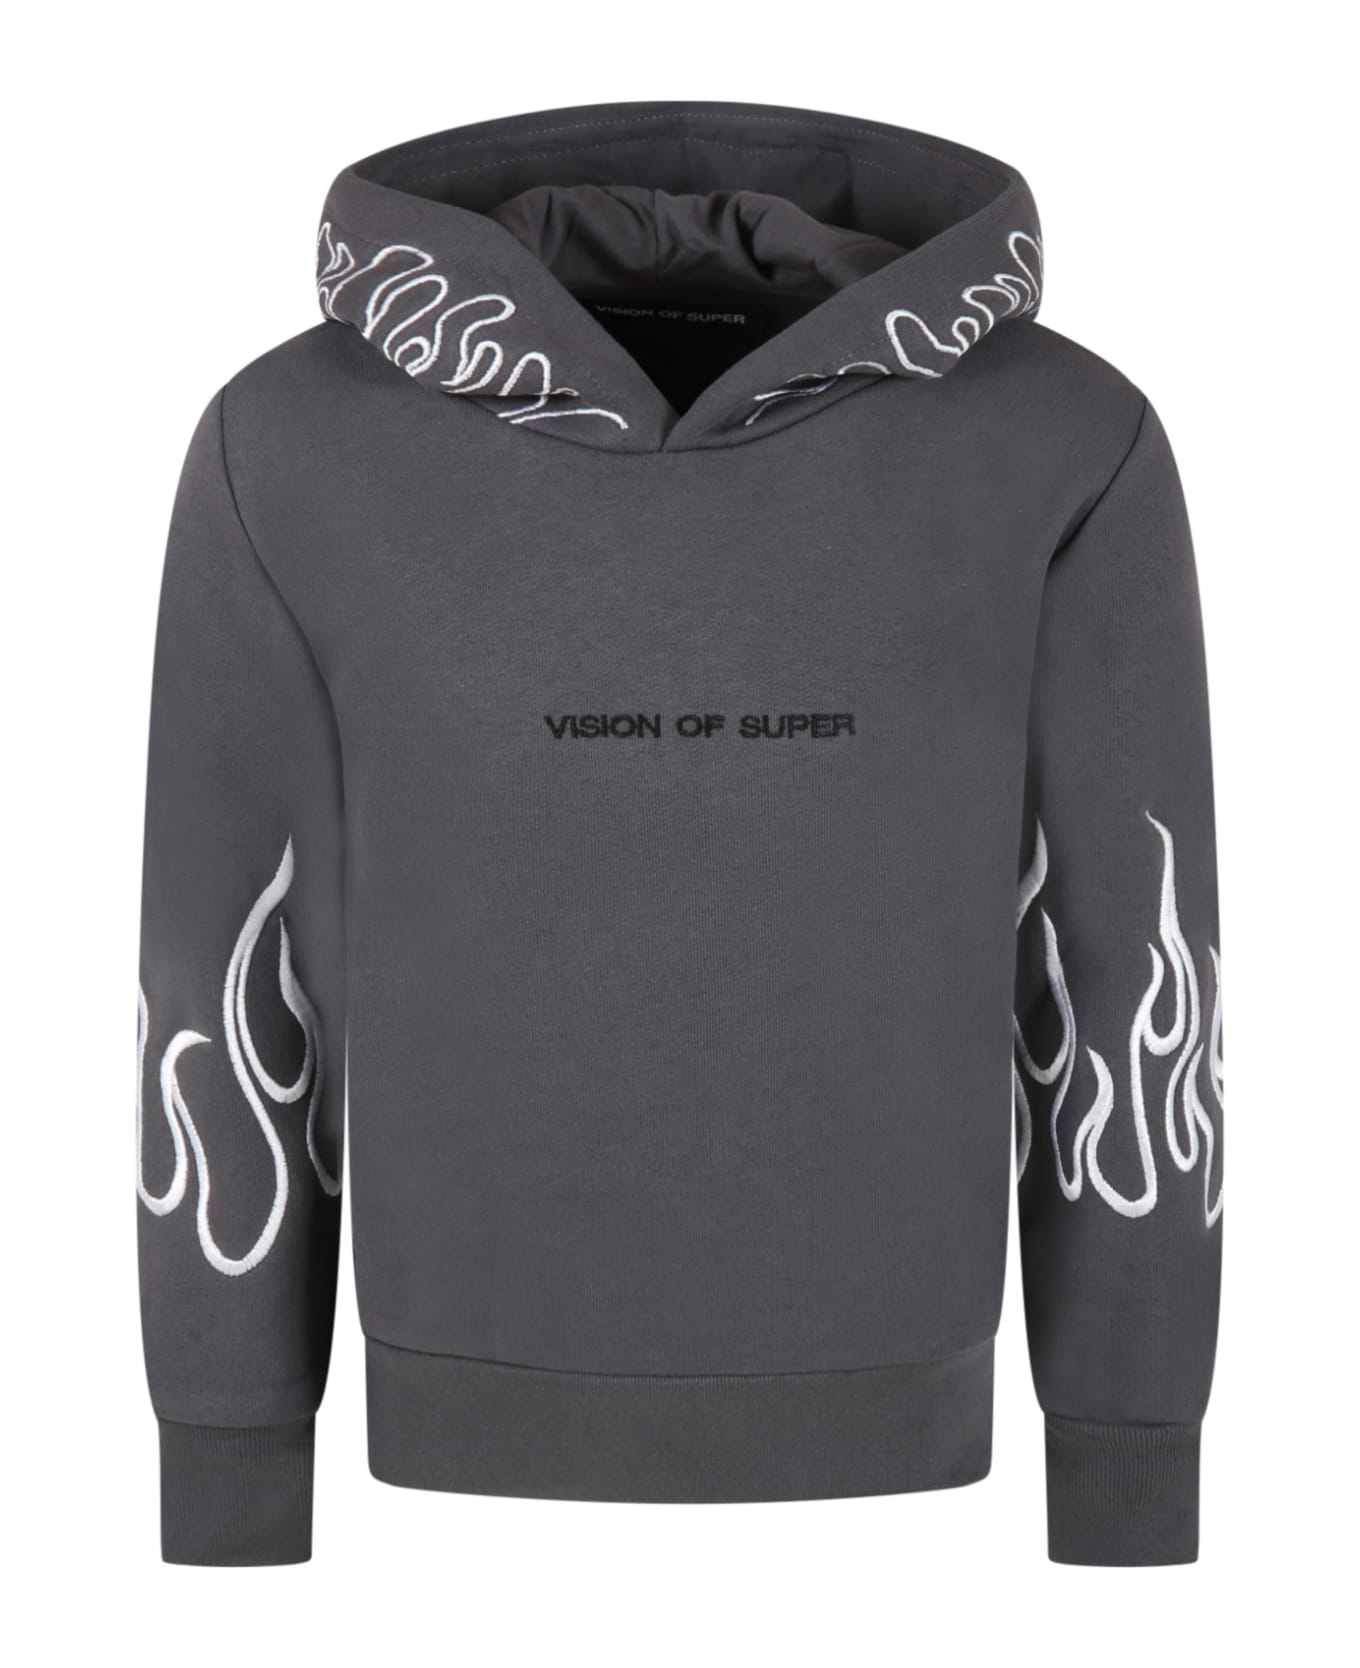 Vision of Super Grey Sweatshirt For Boy With Logo - Grey